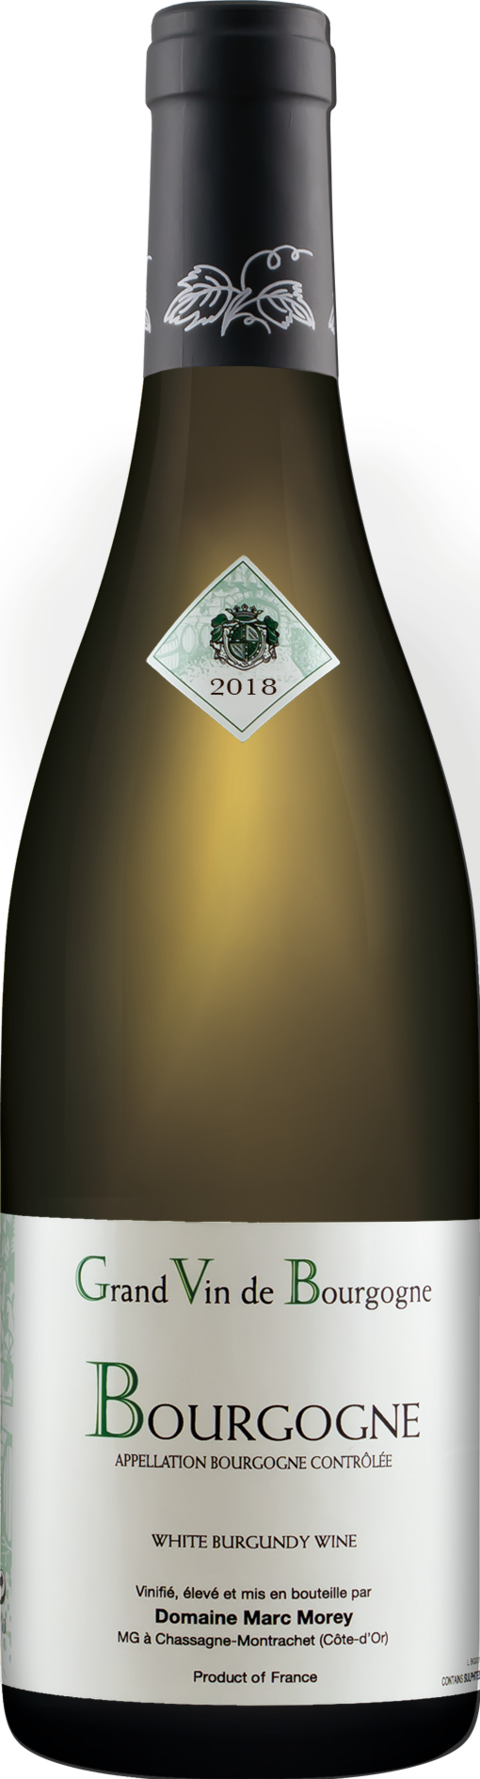 2018 Bourgogne Blanc - Chardonnay 